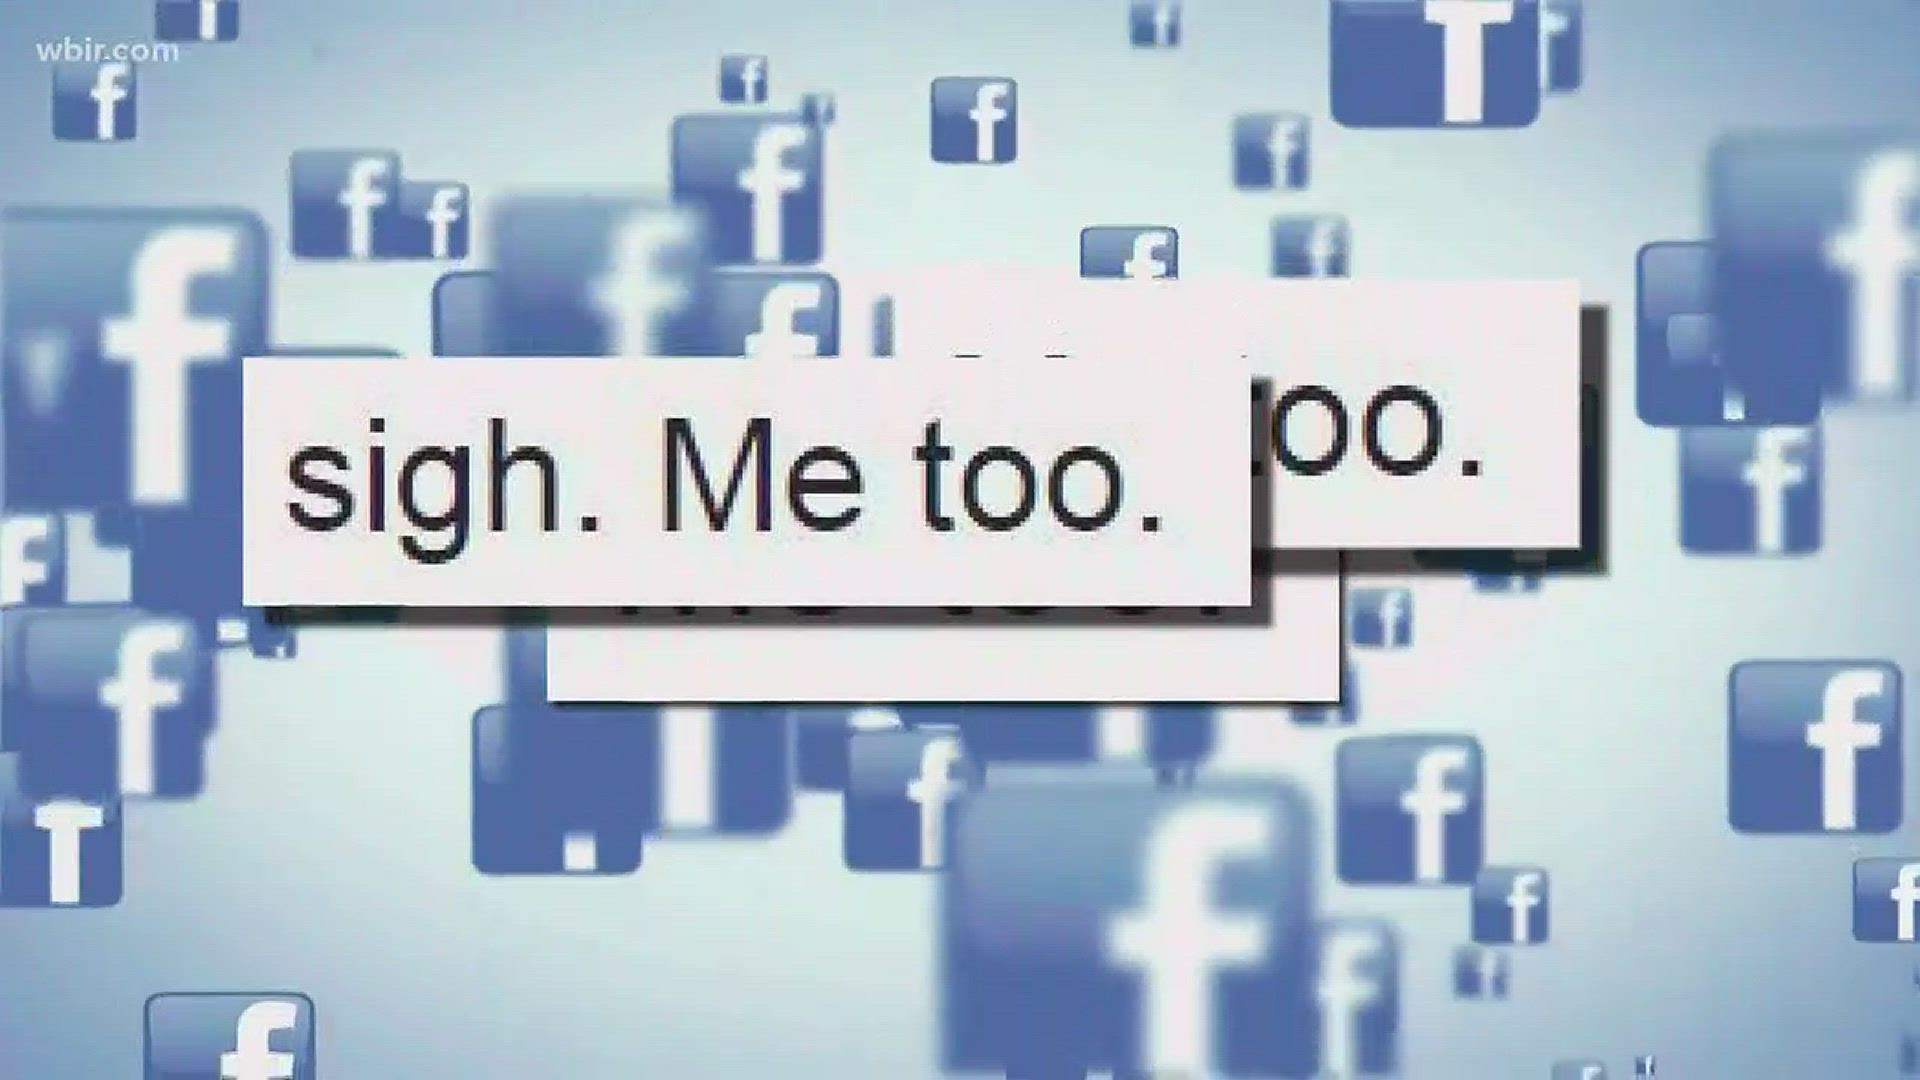 A simple Facebook status is giving survivors a voice.